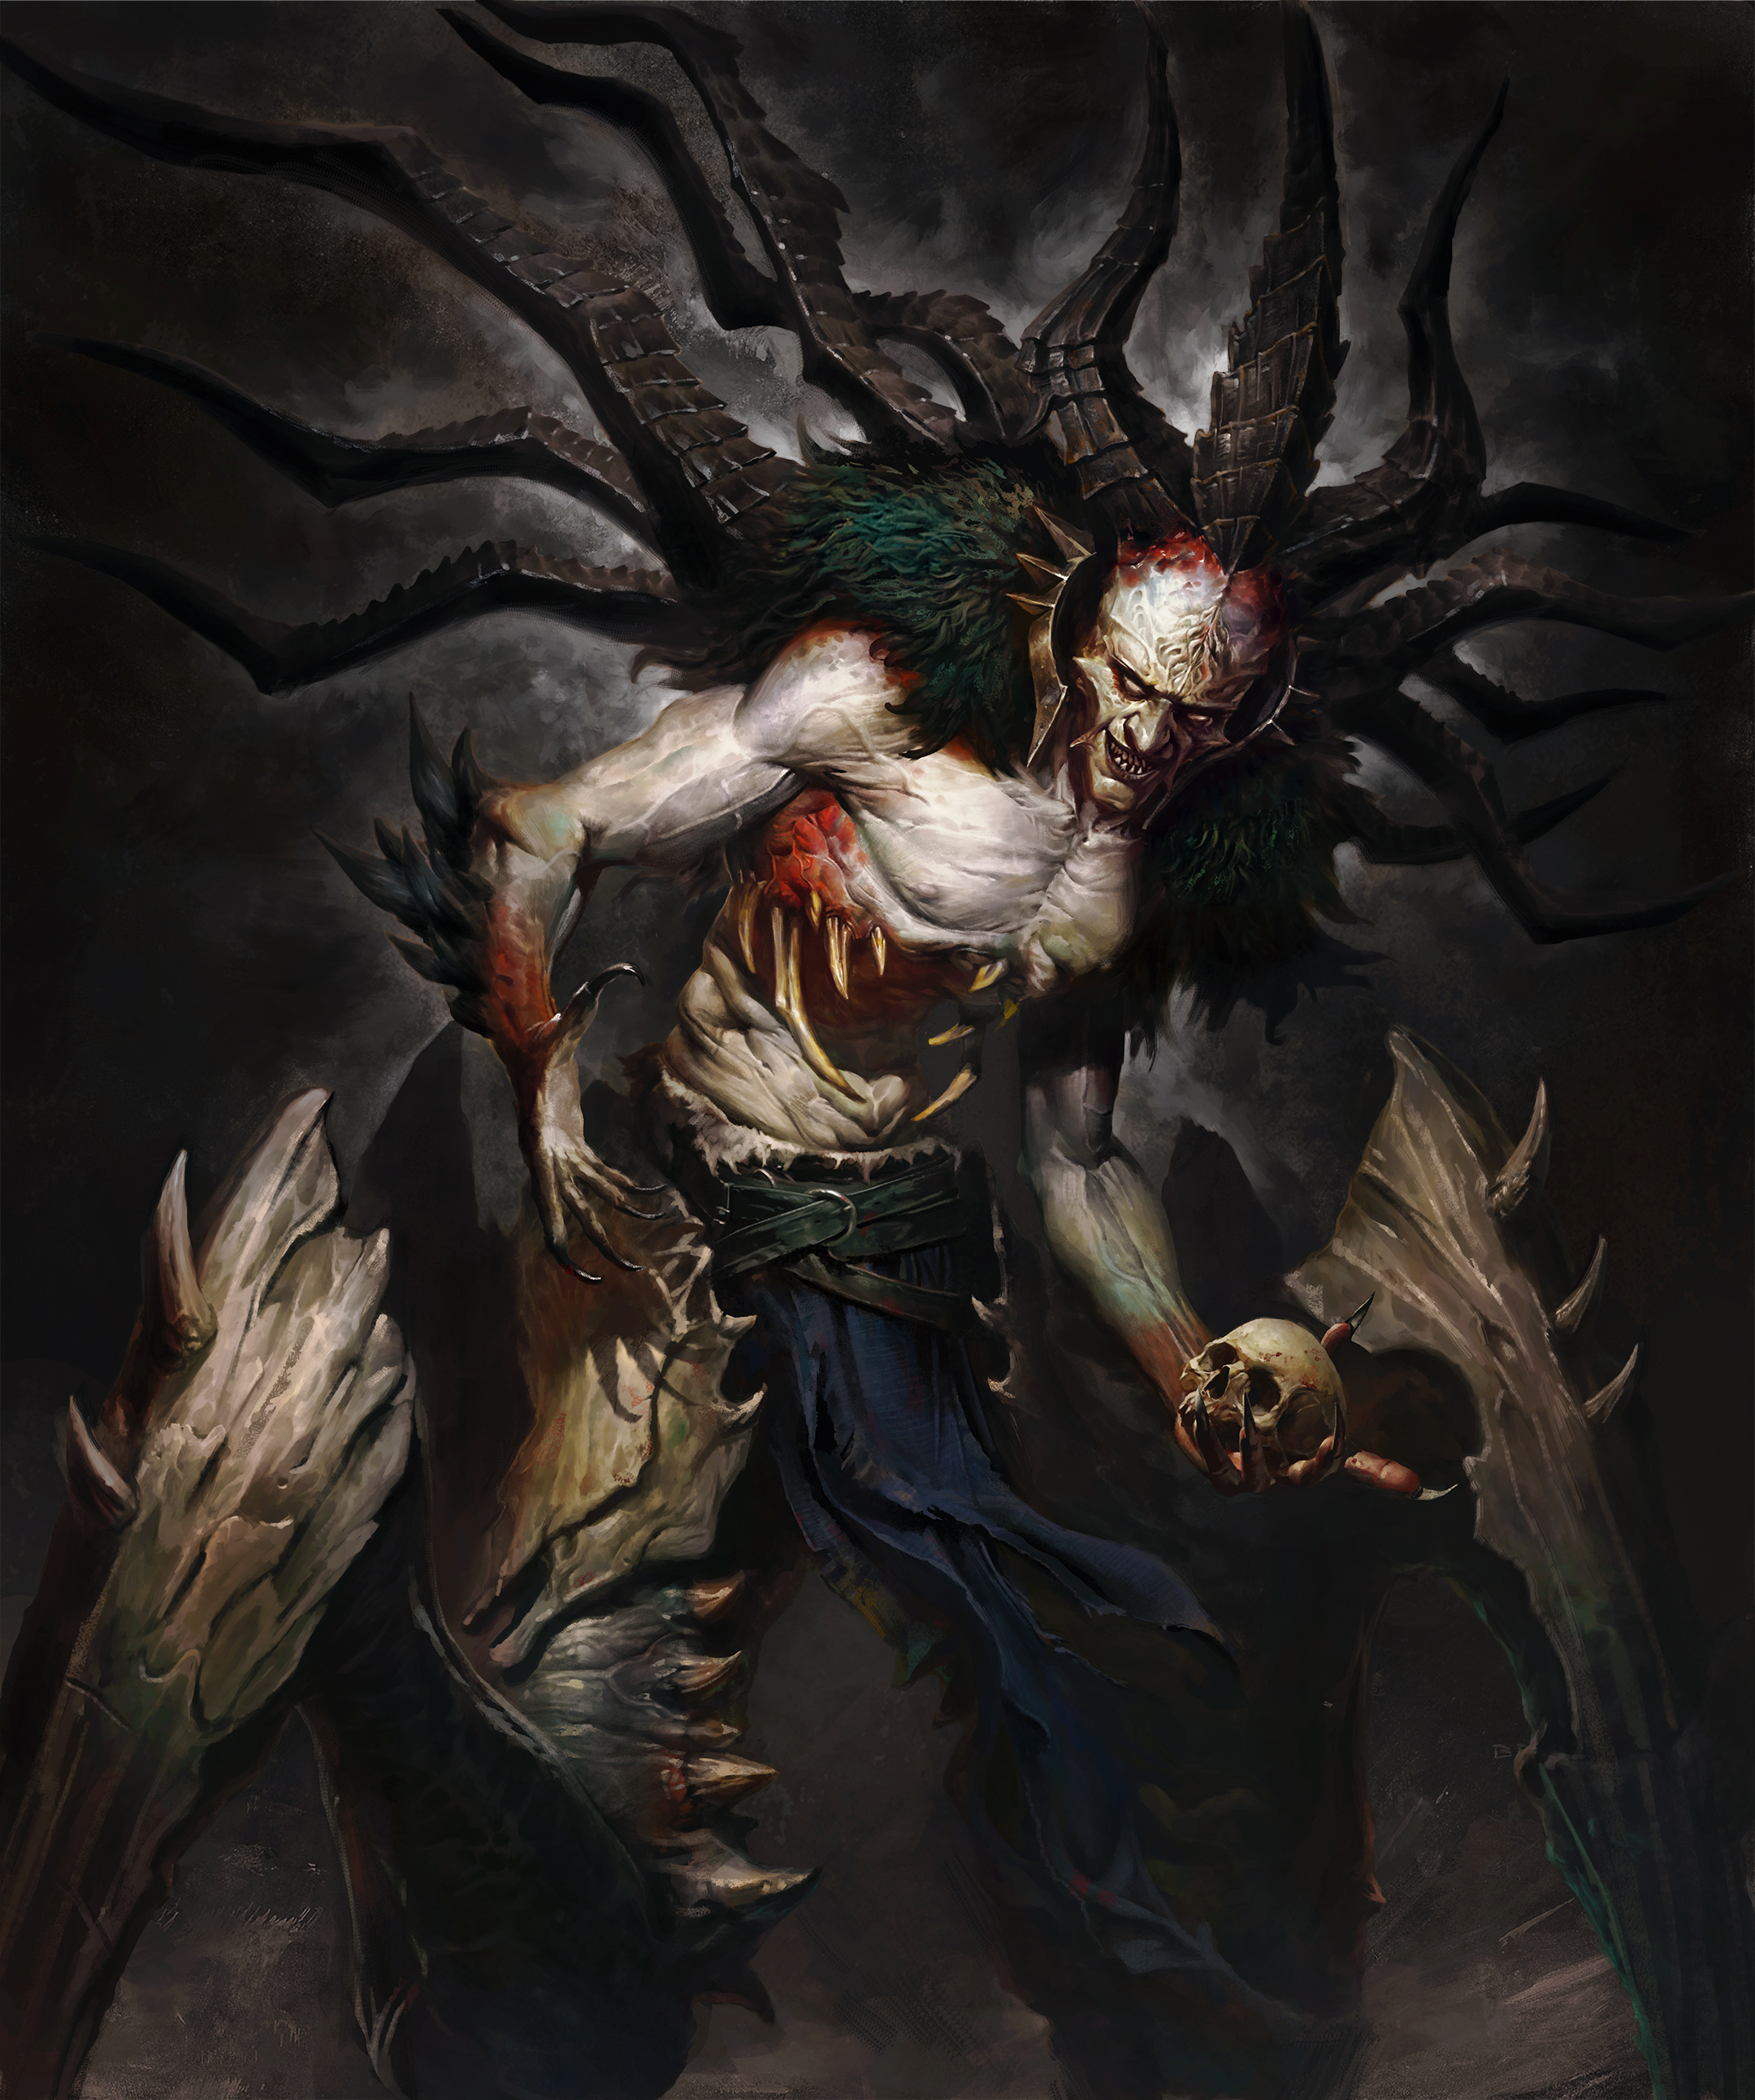 General 2160x2585 Diablo Diablo Immortal video games video game art skull PC gaming creature fantasy art